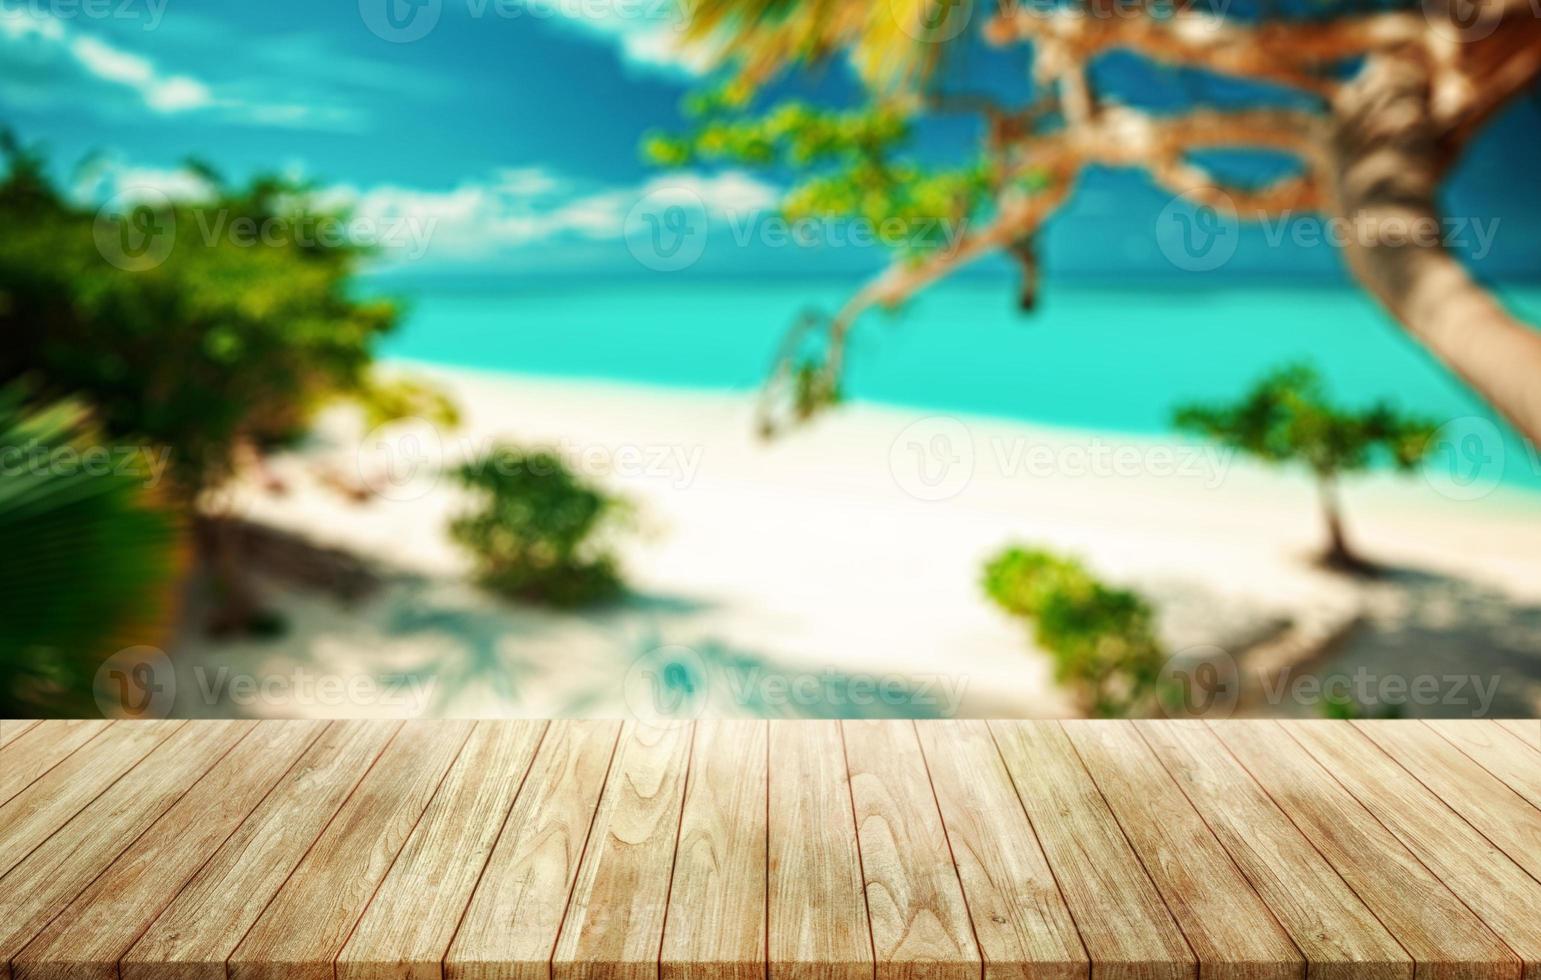 vacío de madera mesa en playa borroso antecedentes. asamblea, producto monitor exhibición. foto